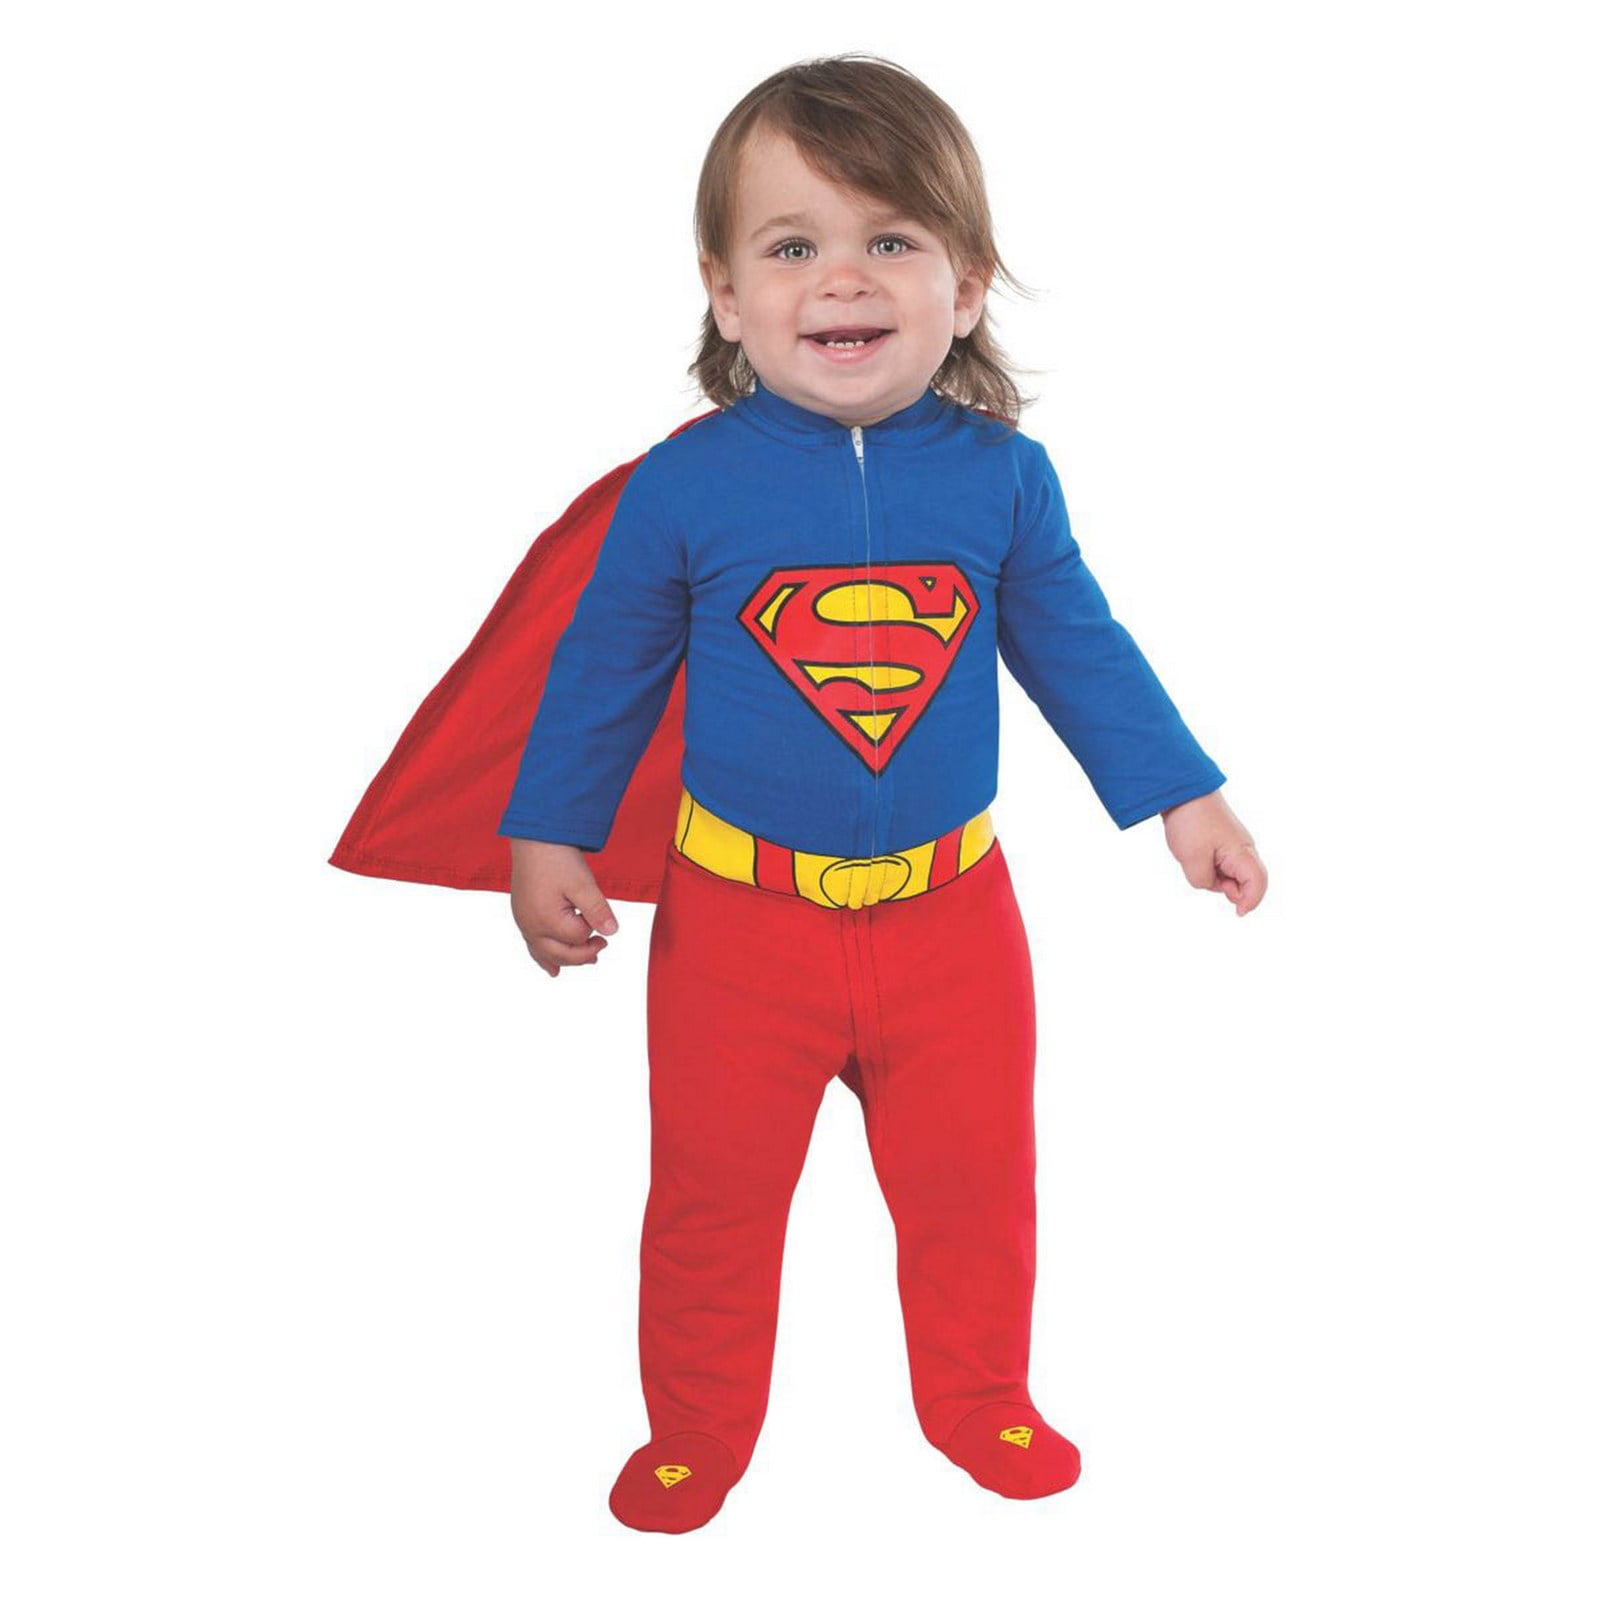 Infant Superman Romper Costume - Walmart.com